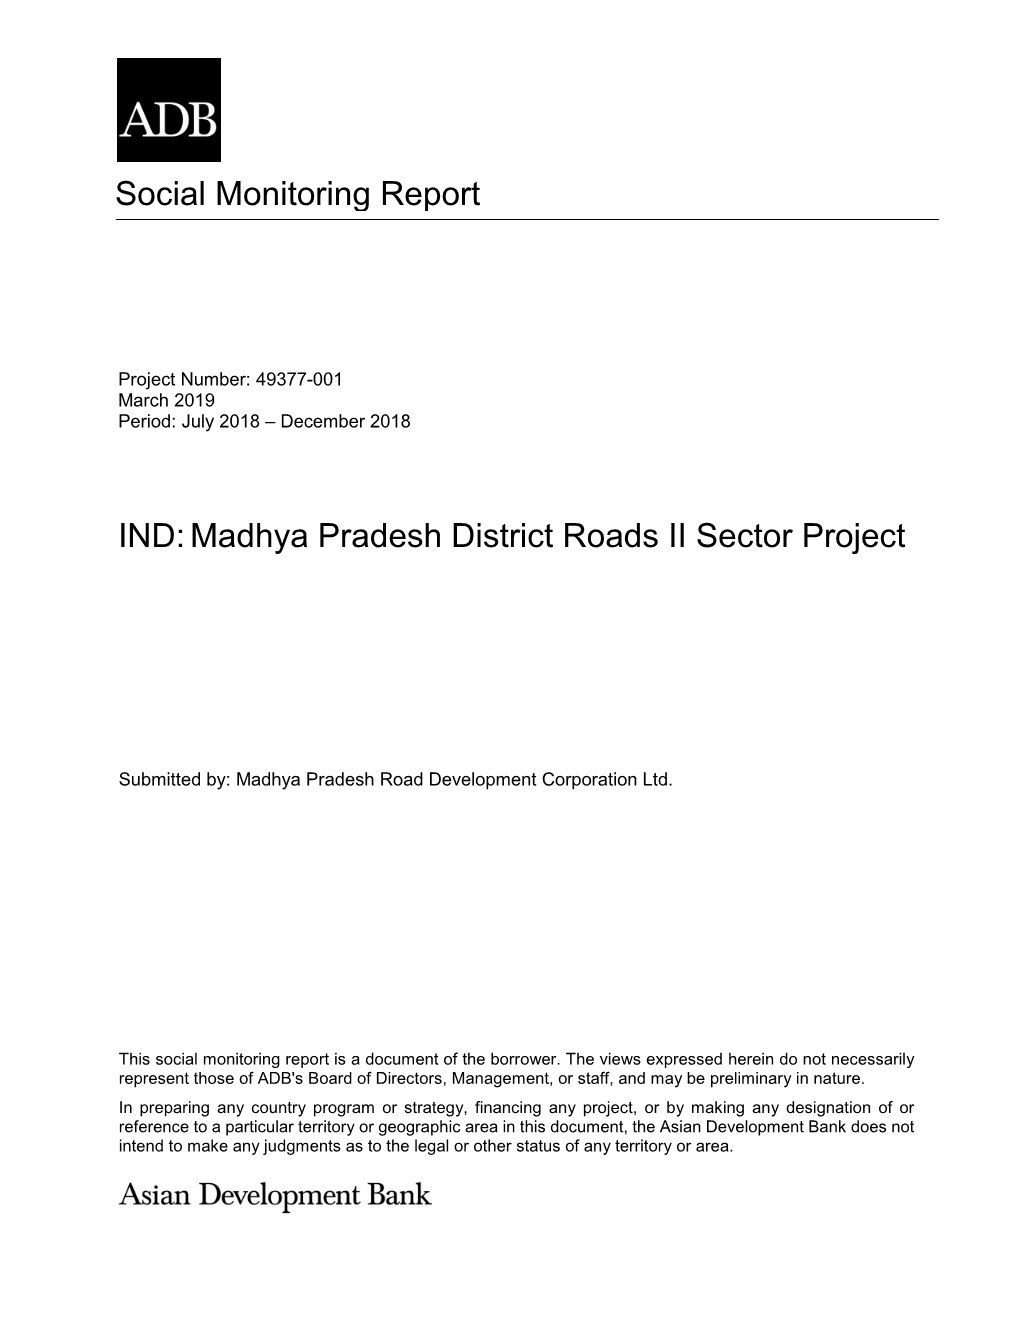 49377-001: Madhya Pradesh District Roads II Sector Project